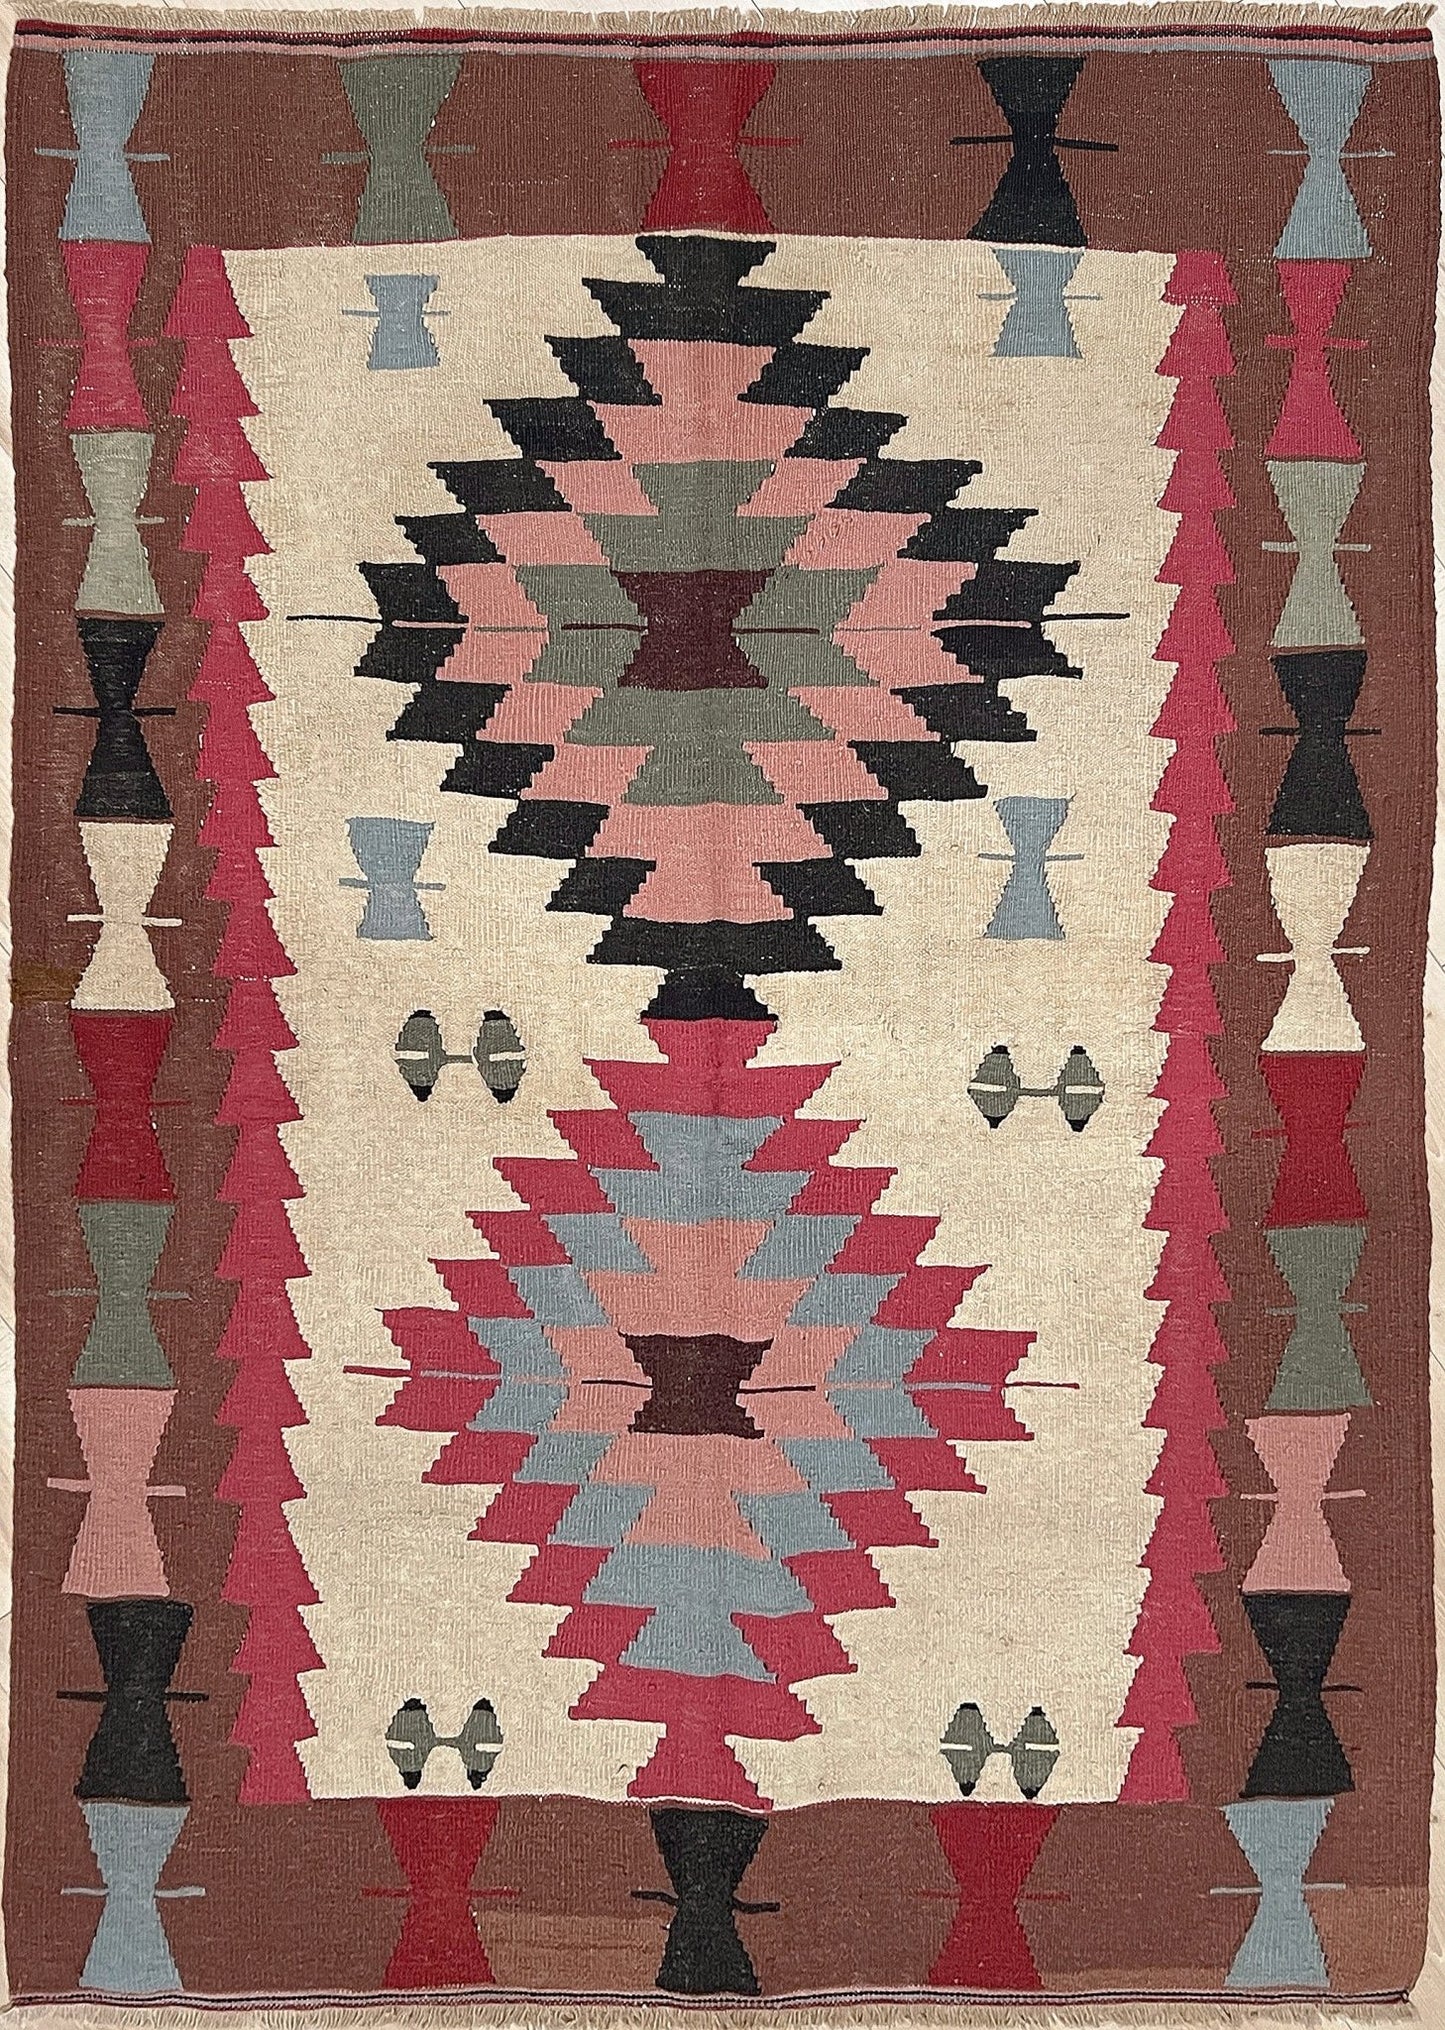 Navajo style flatweave Turkish Kilim rug shop san francisco bay  area. Handmade small wool carpet. Buy handmade rugs online